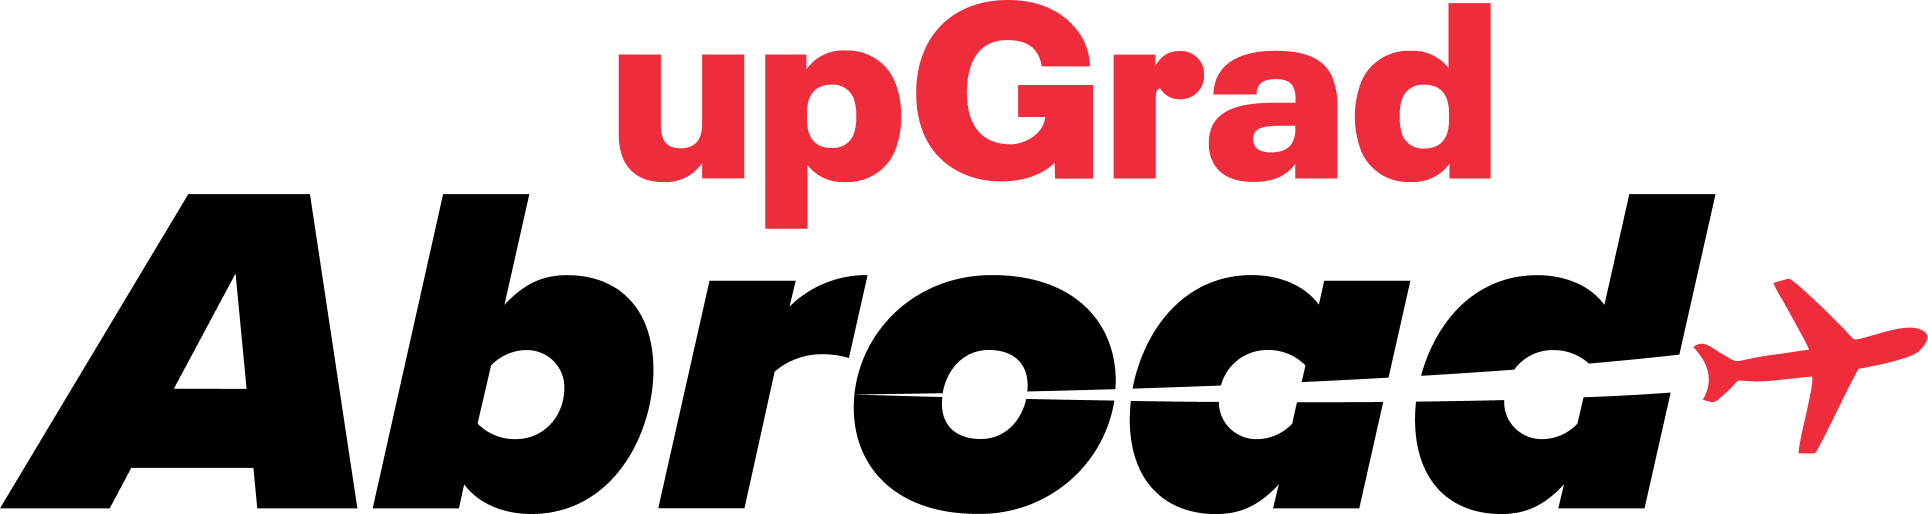 upgrad_logo